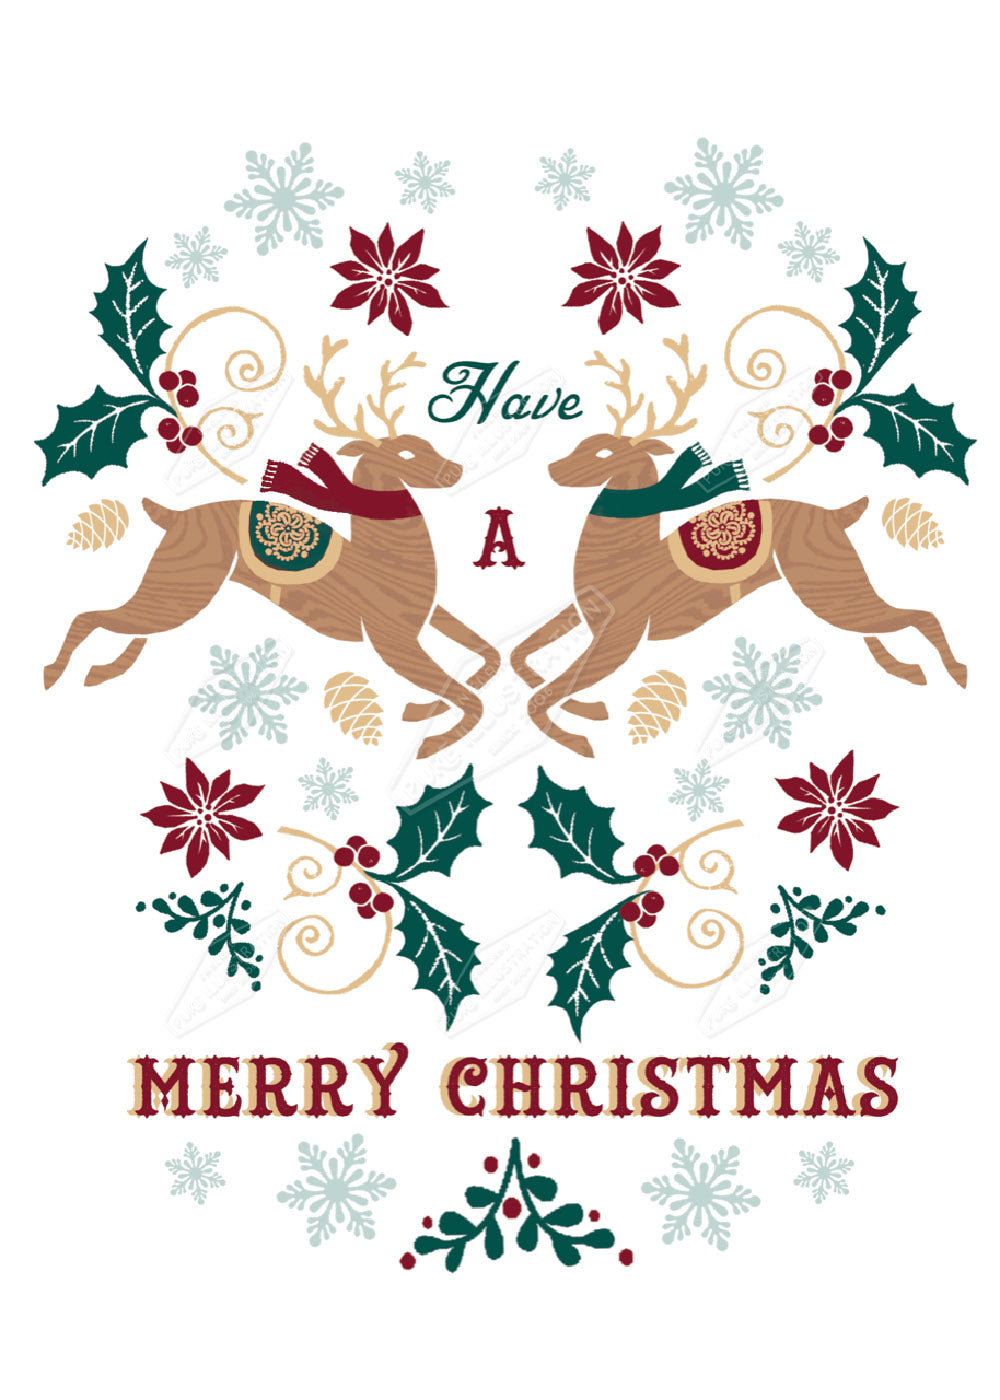 00032793DEV - Deva Evans is represented by Pure Art Licensing Agency - Christmas Greeting Card Design